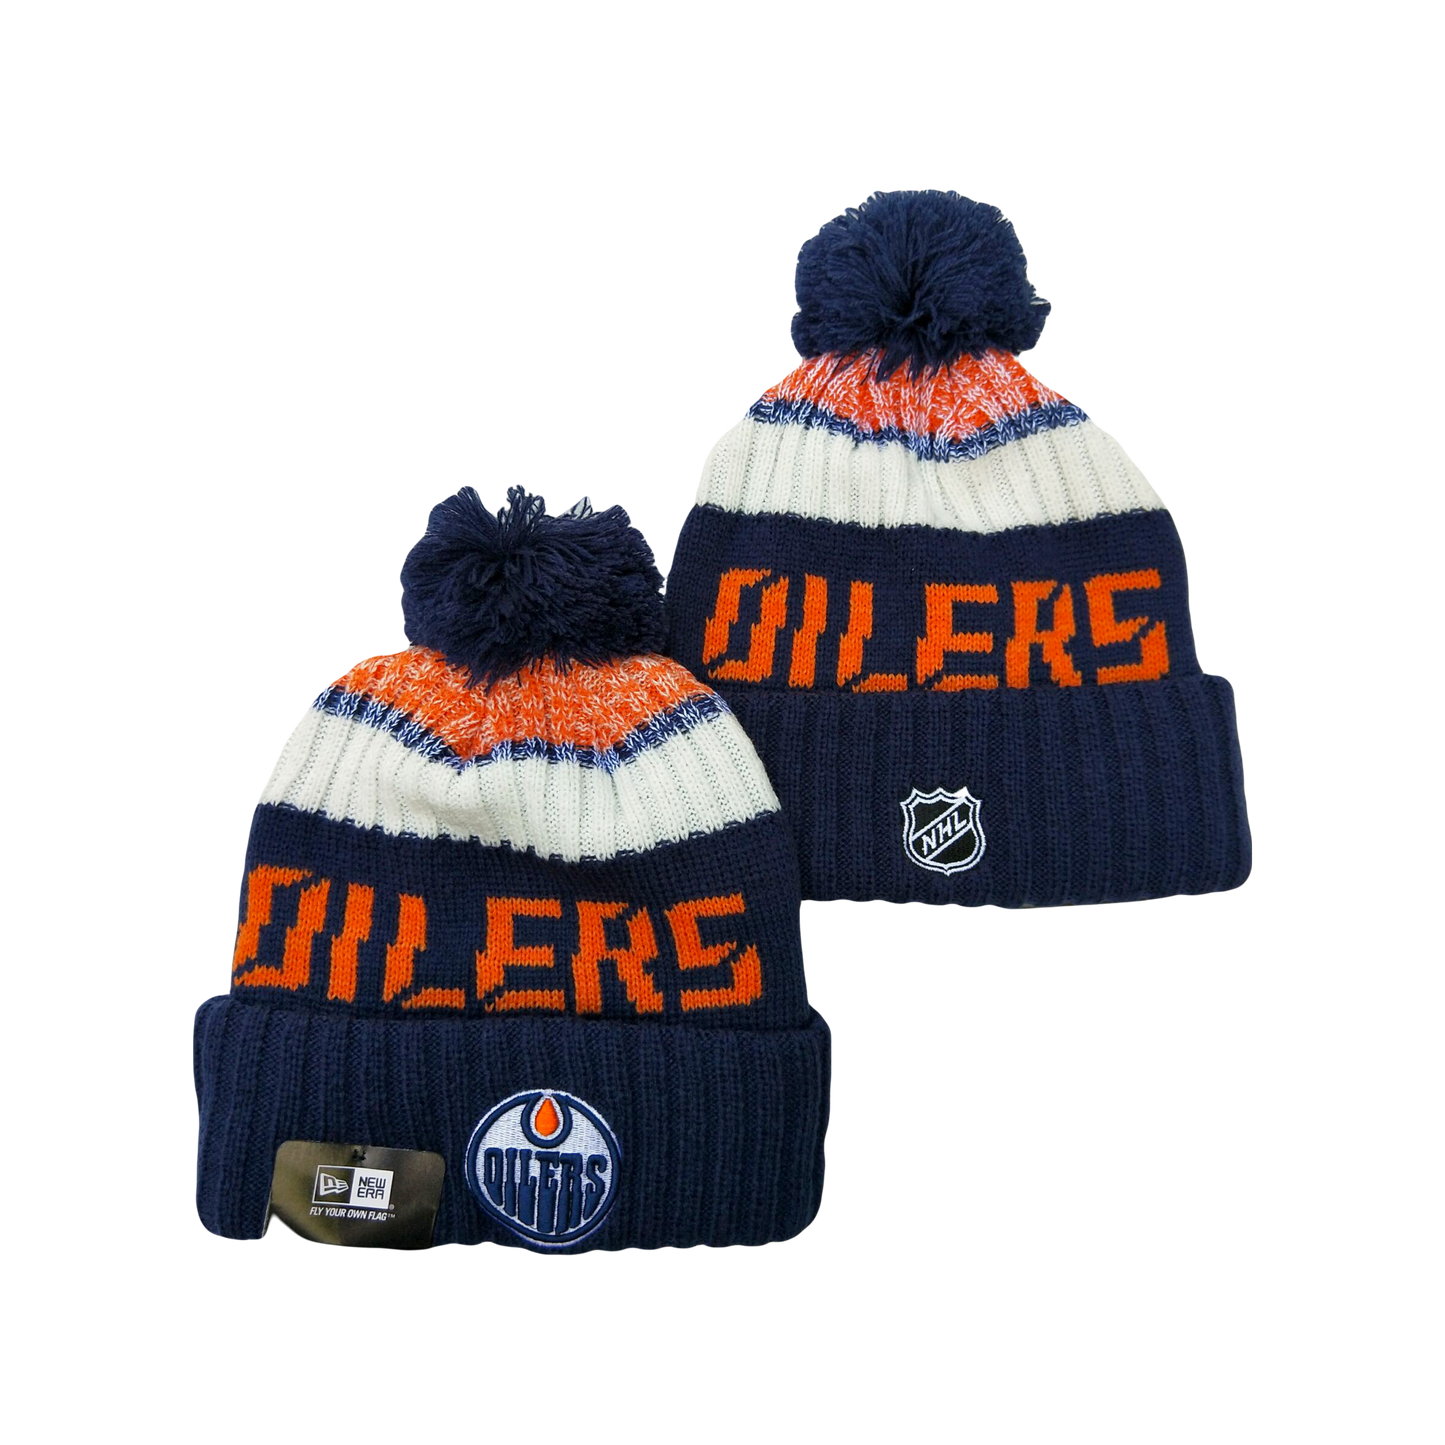 Edmonton Oilers NHL New Era Knit Beanie - Blue